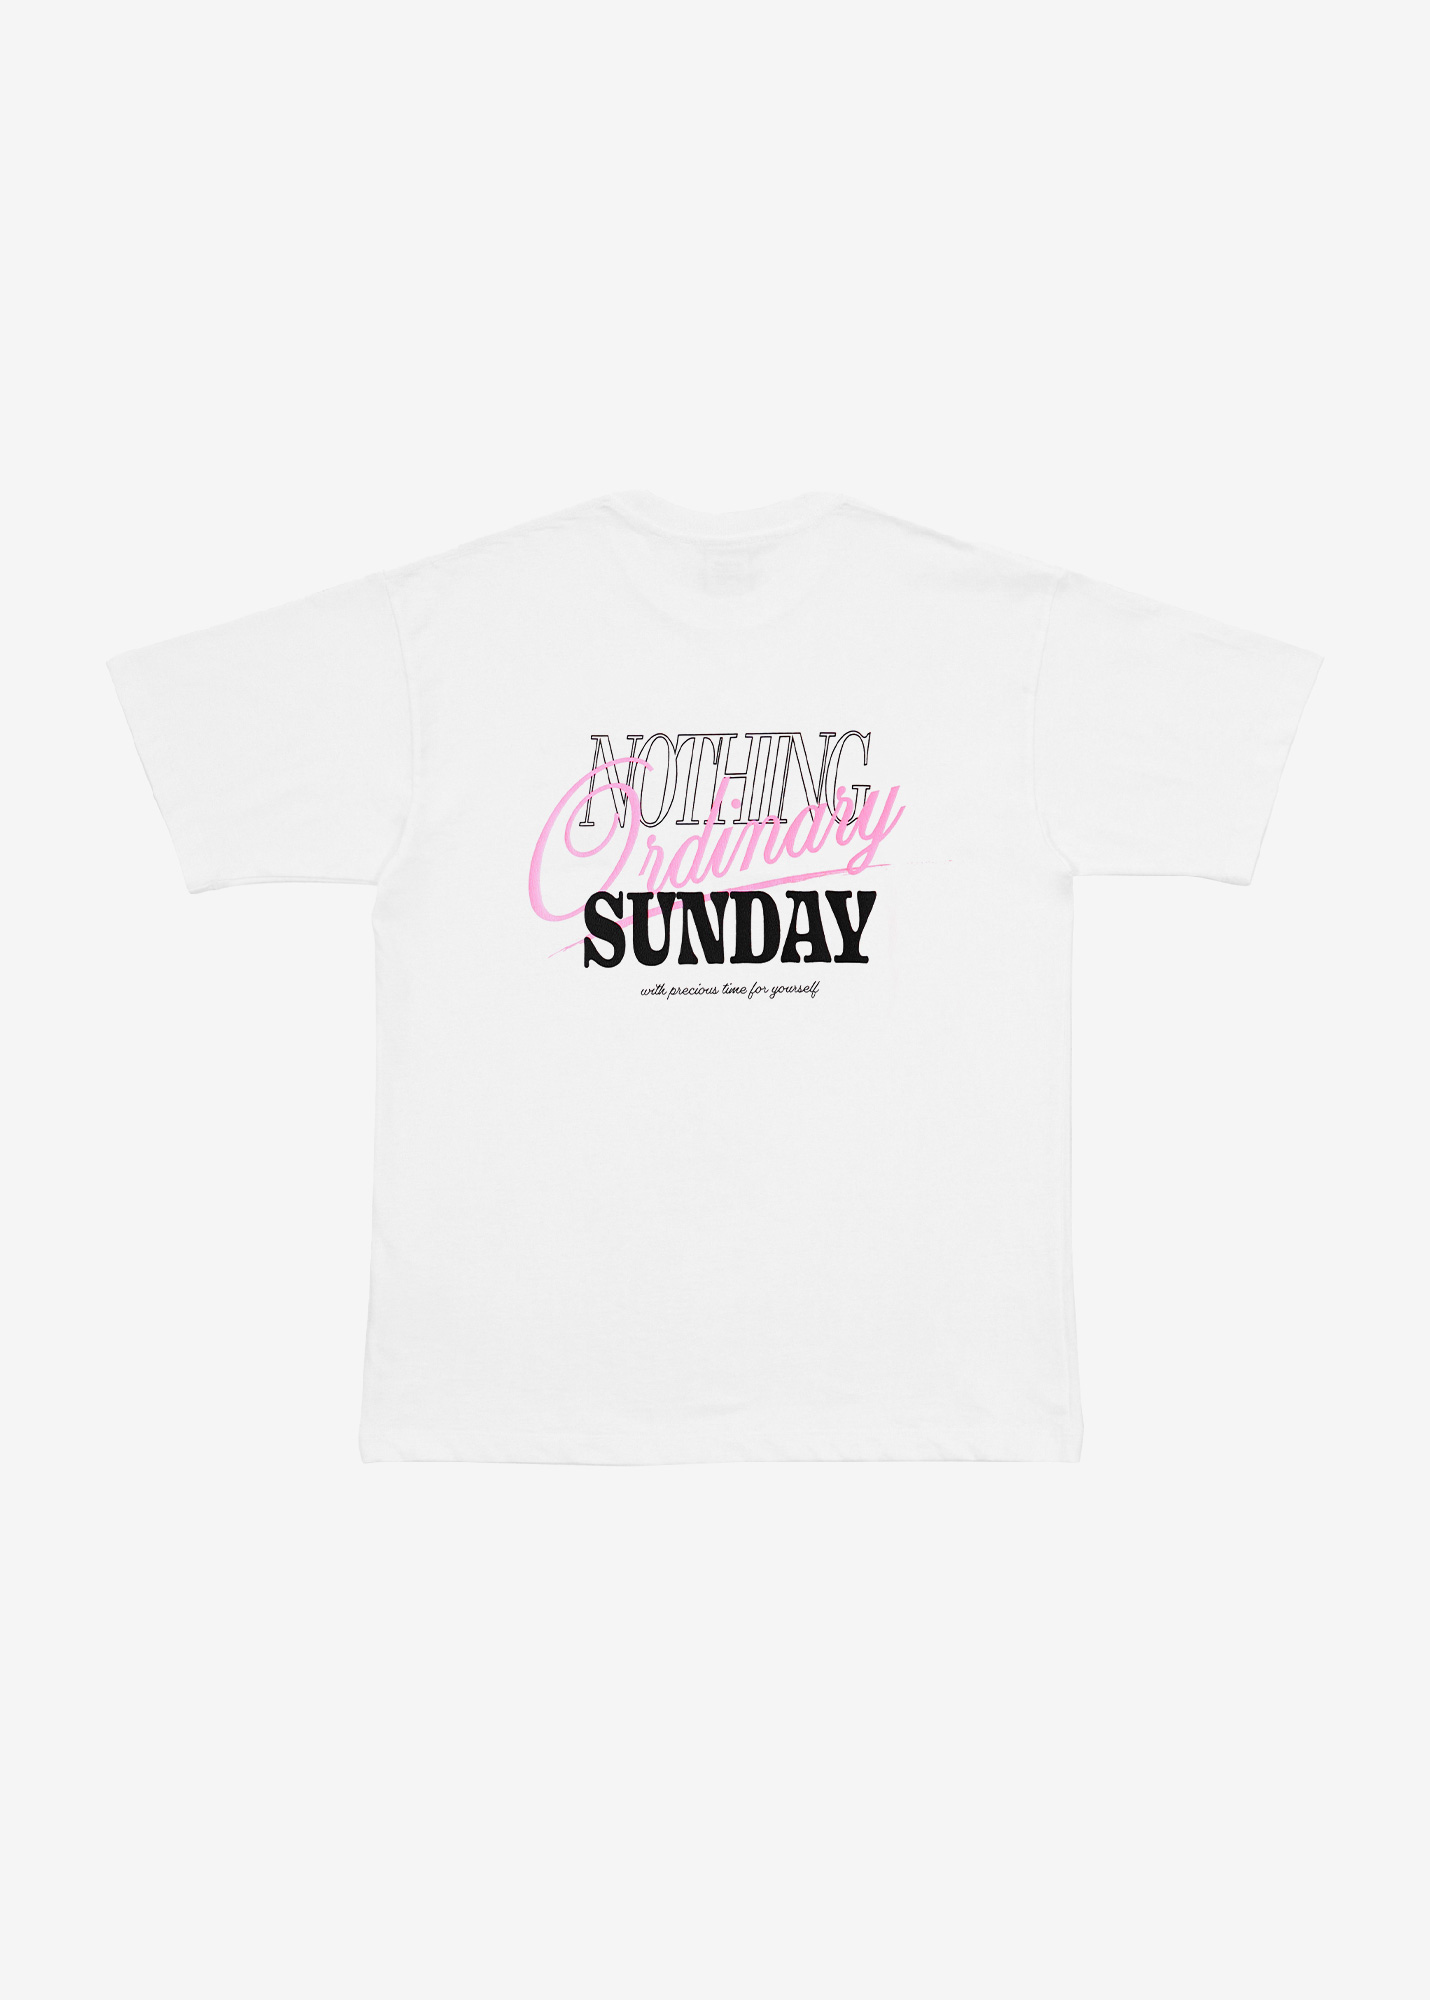 NOS7 핑크 커시브 티셔츠 - 화이트